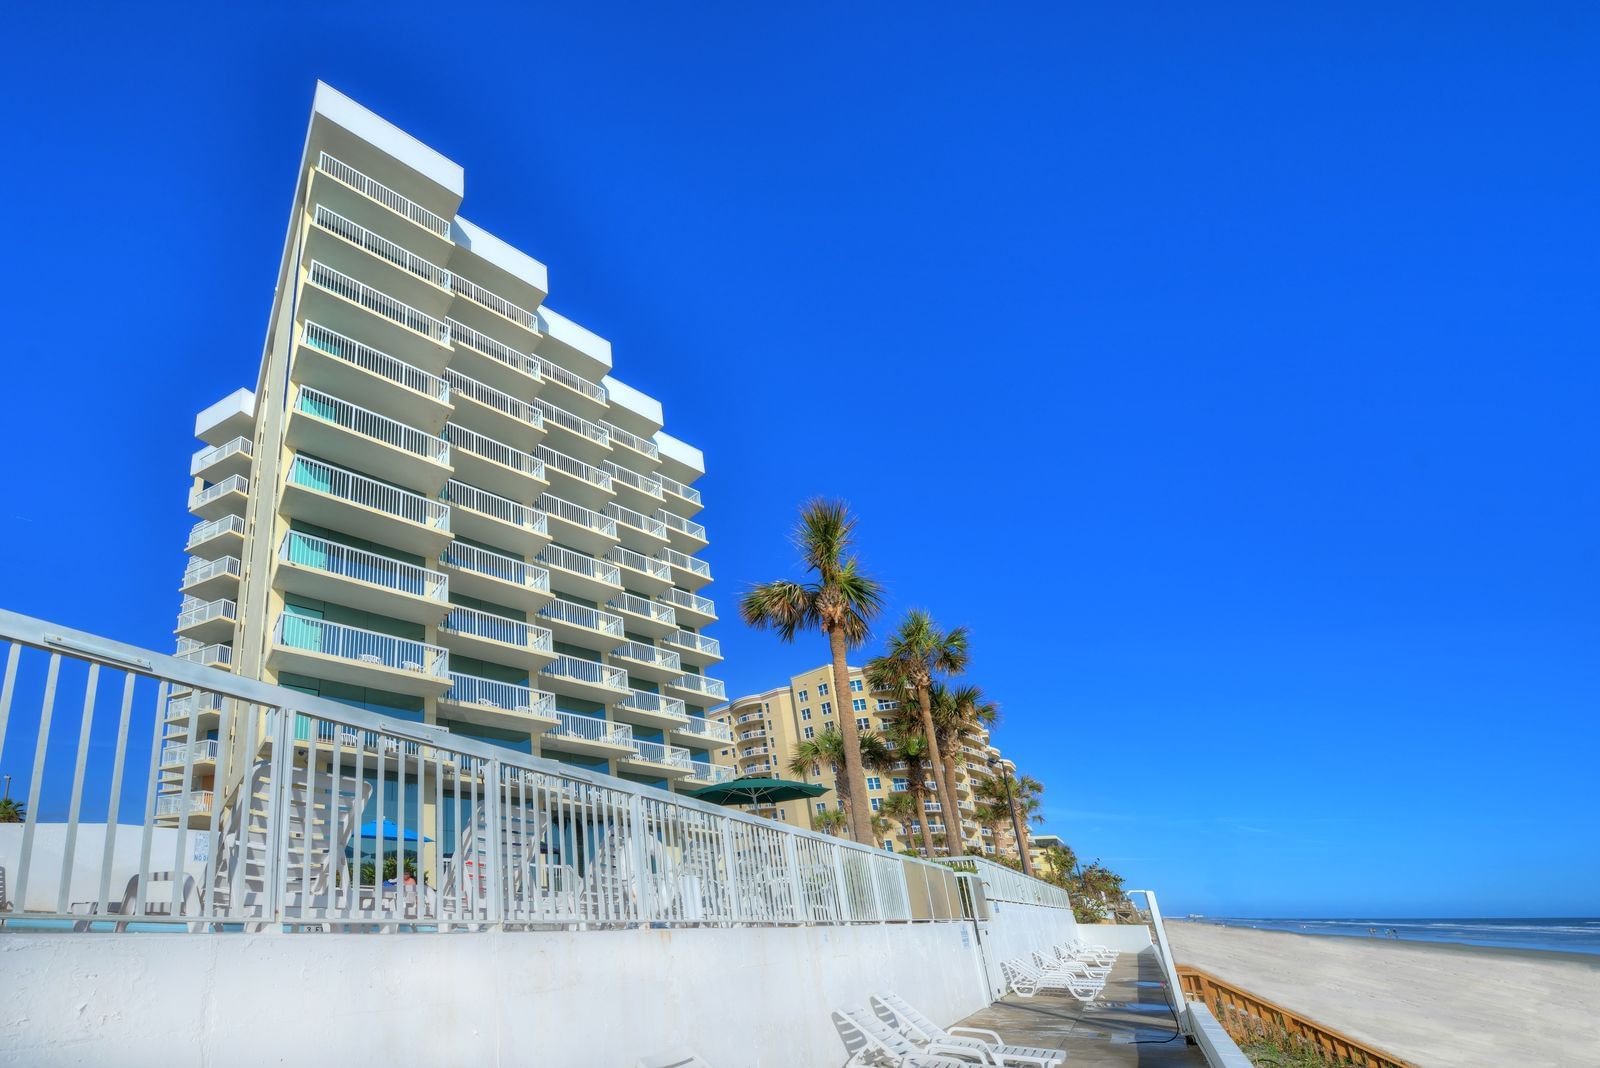 Bahama House - Discover Our Daytona Beach Hotels